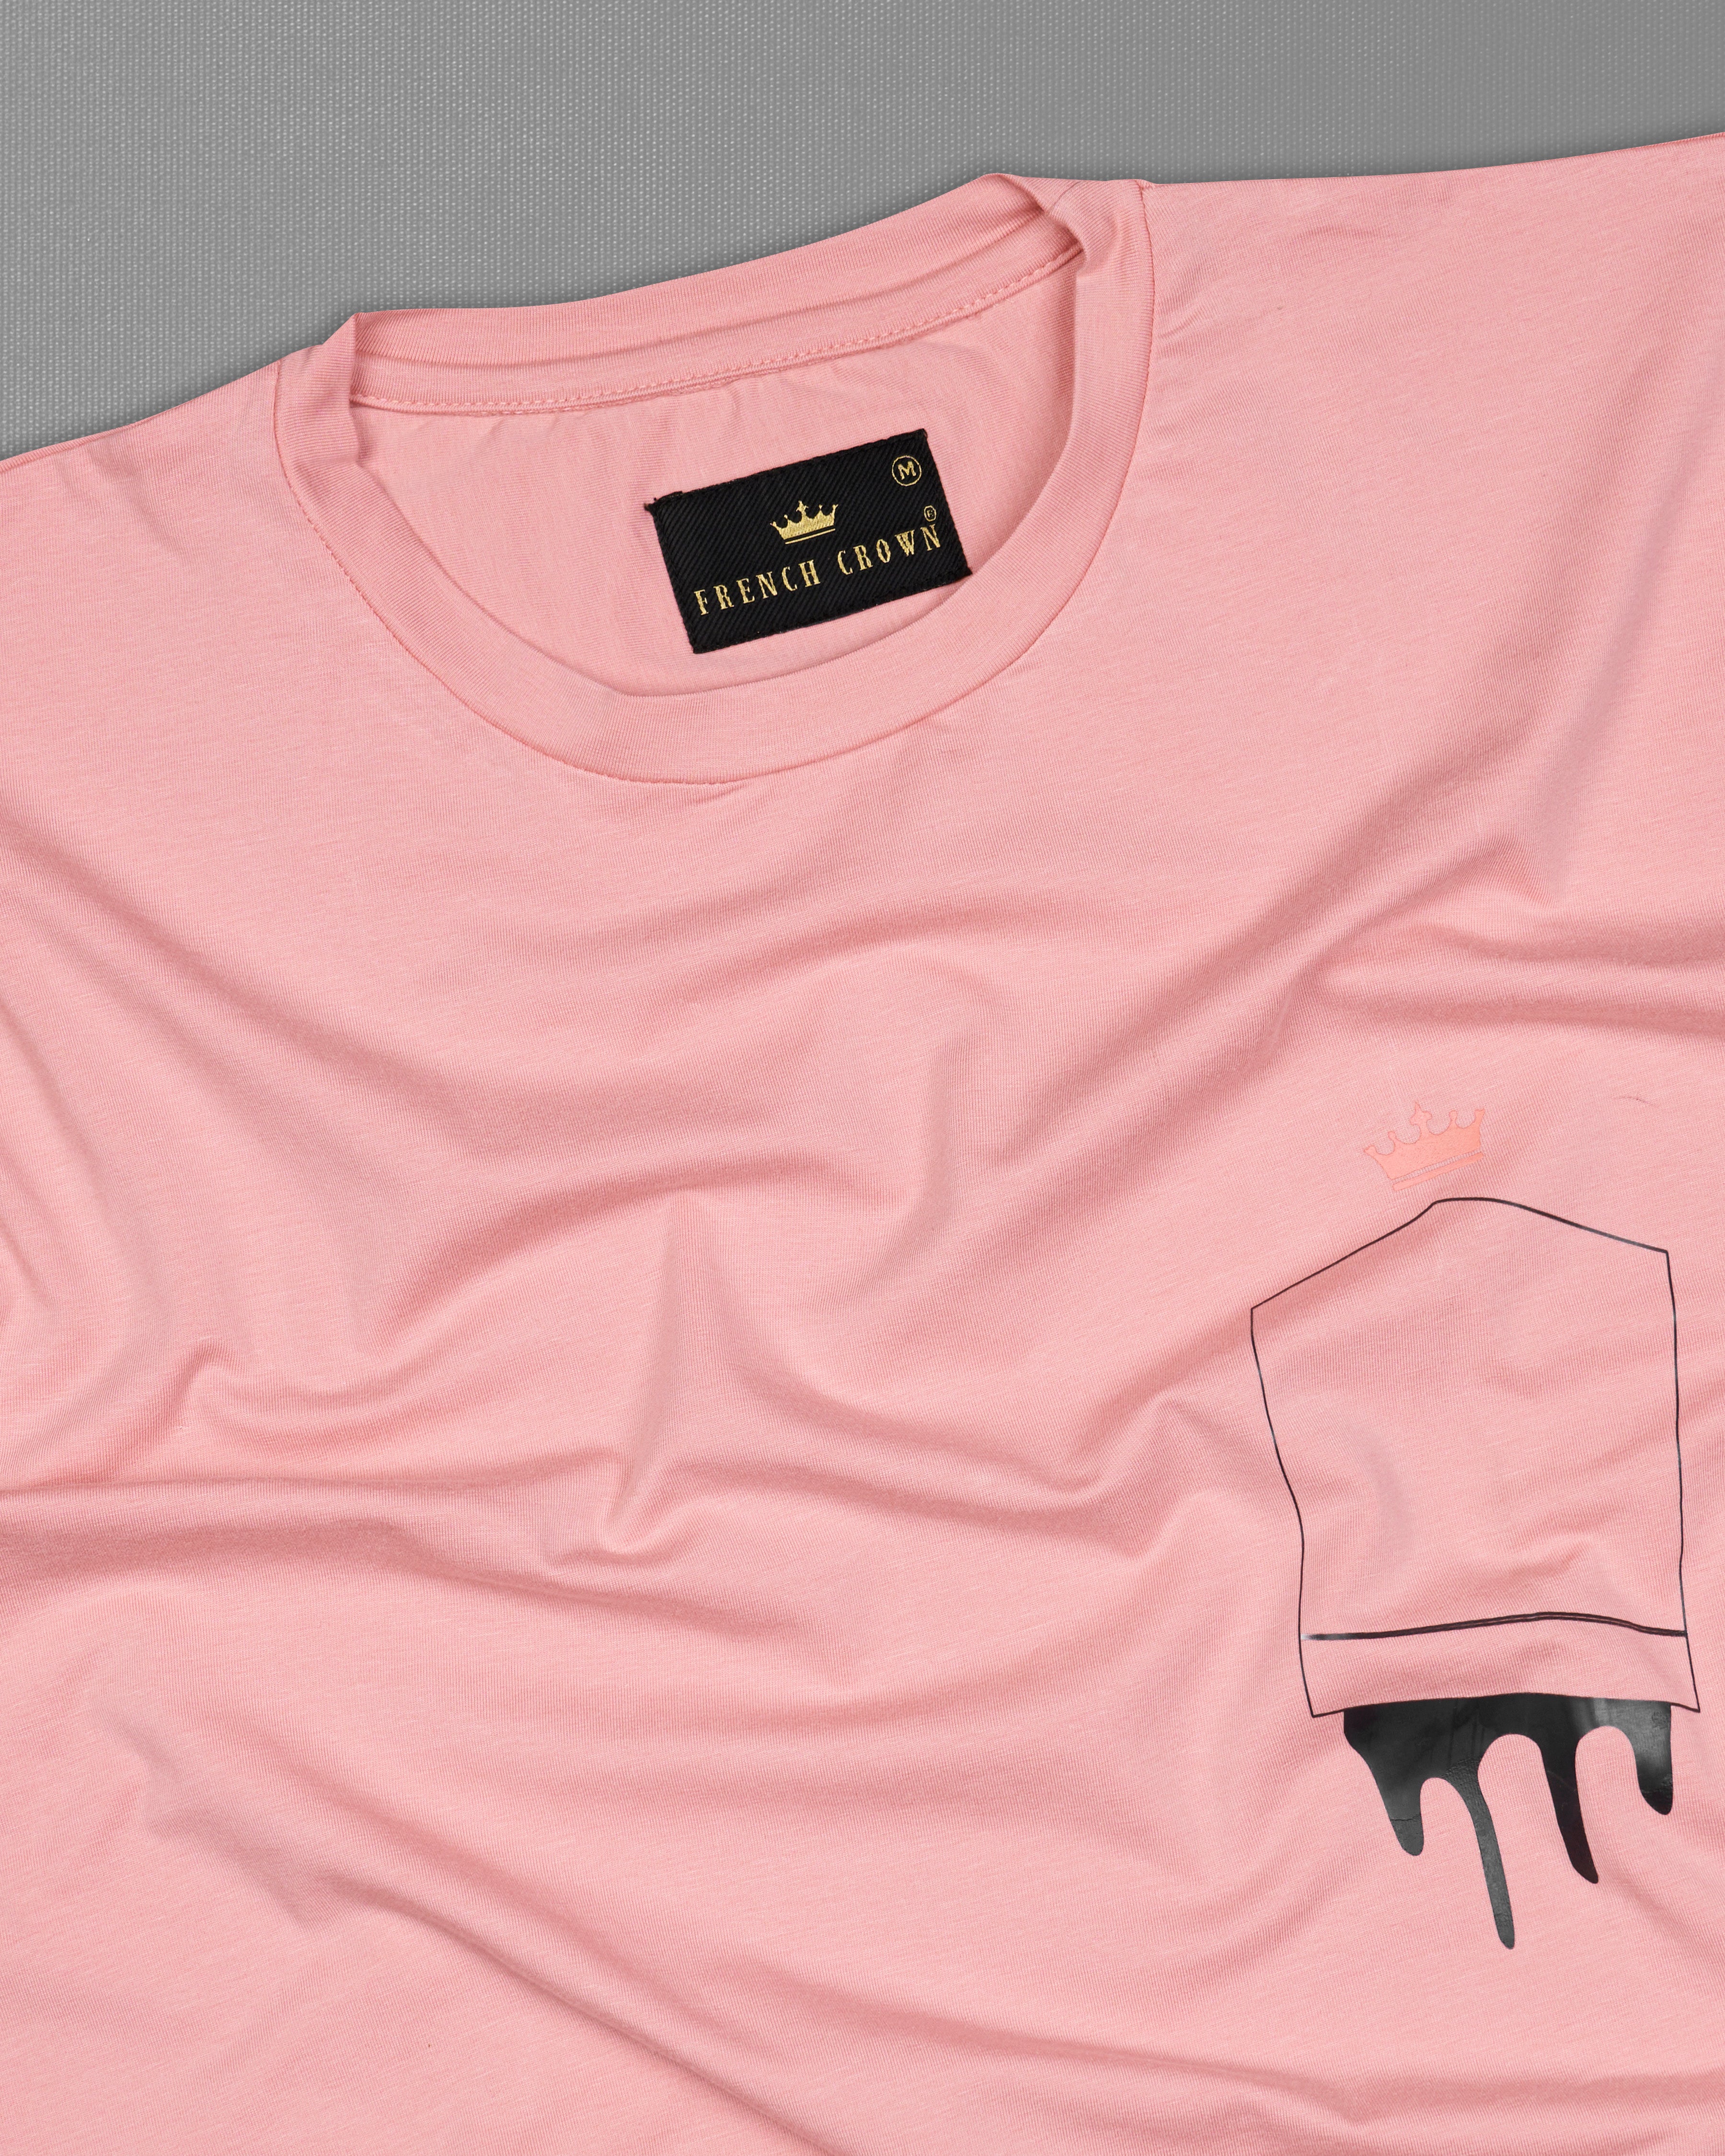 Shilo Pink Funky Printed Super Soft Premium Organic Cotton Designer T-Shirt TS072-W02-RPRT027-S, TS072-W02-RPRT027-M, TS072-W02-RPRT027-L, TS072-W02-RPRT027-XL, TS072-W02-RPRT027-XXL